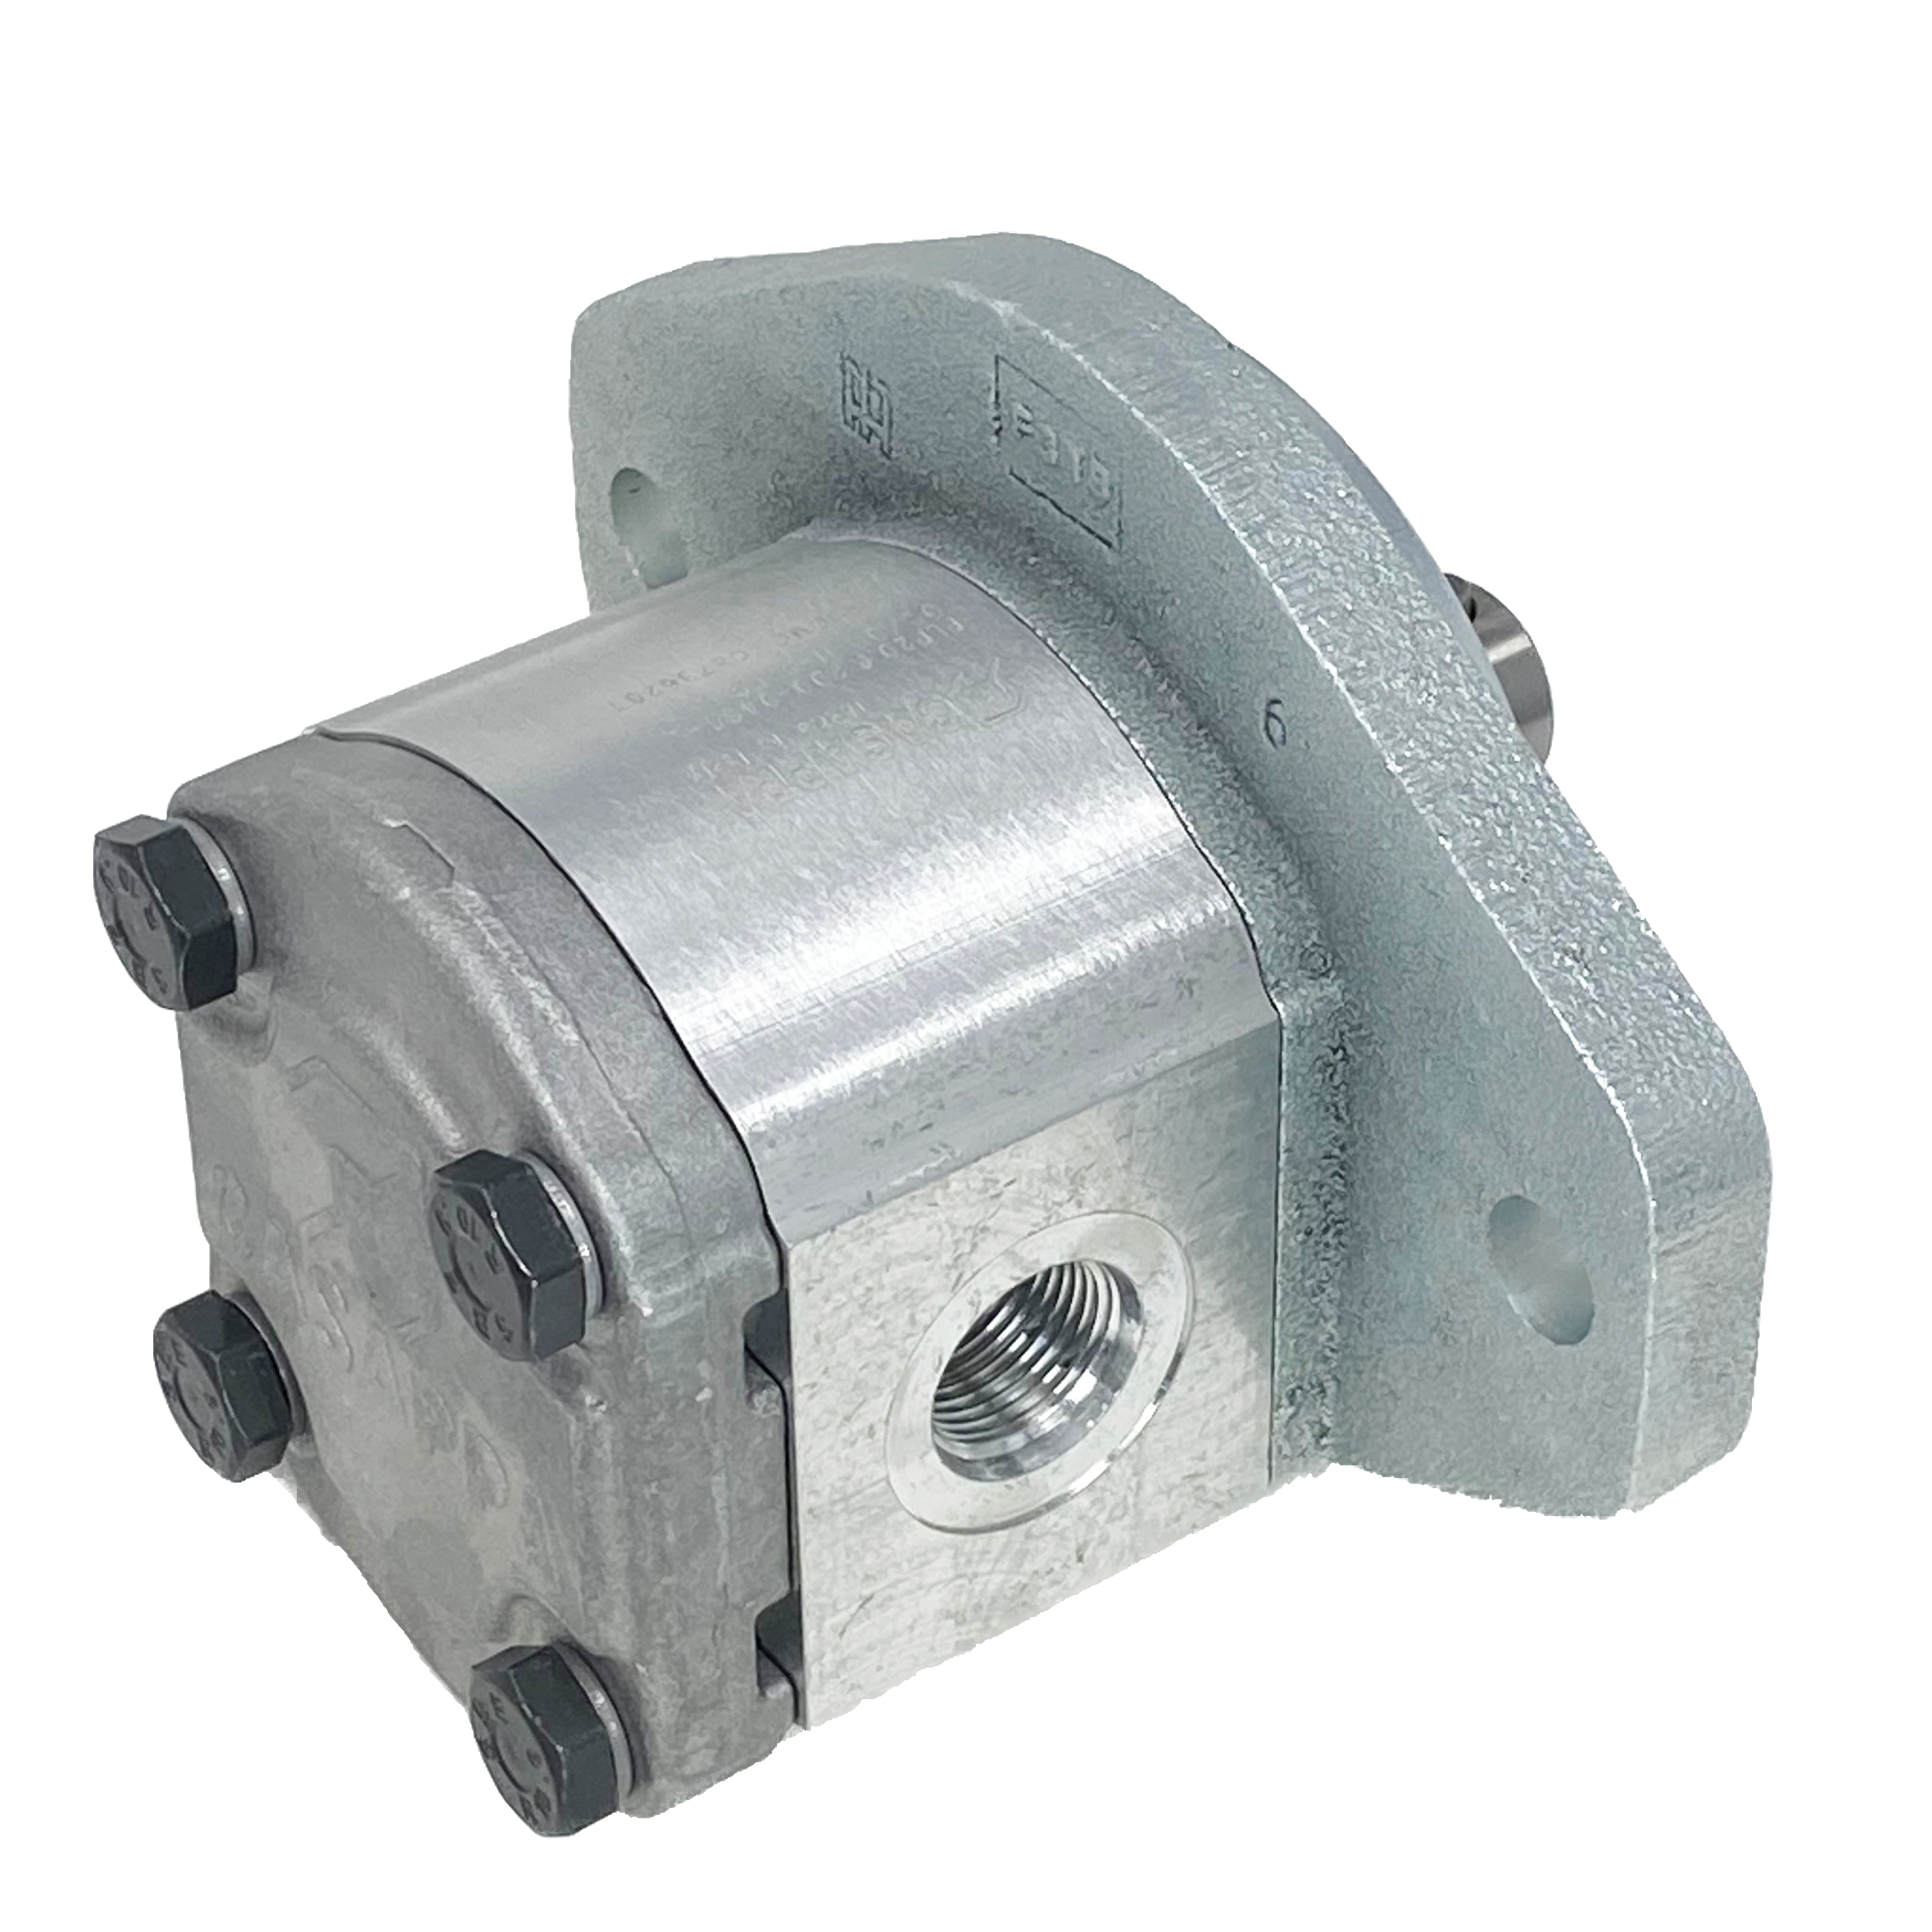 PLM20.9B0-32S5-LOC/OC-N-L : Casappa Polaris Gear Motor, 9.17cc, 3625psi Rated, 3500RPM, Reversible Interior Drain, 3/4" Bore x 1/4" Key Shaft, SAE B 2-Bolt Flange, 0.625 (5/8") #10 SAE Inlet, 0.625 (5/8") #10 SAE Outlet, Aluminum Body, Cast Iron Flange